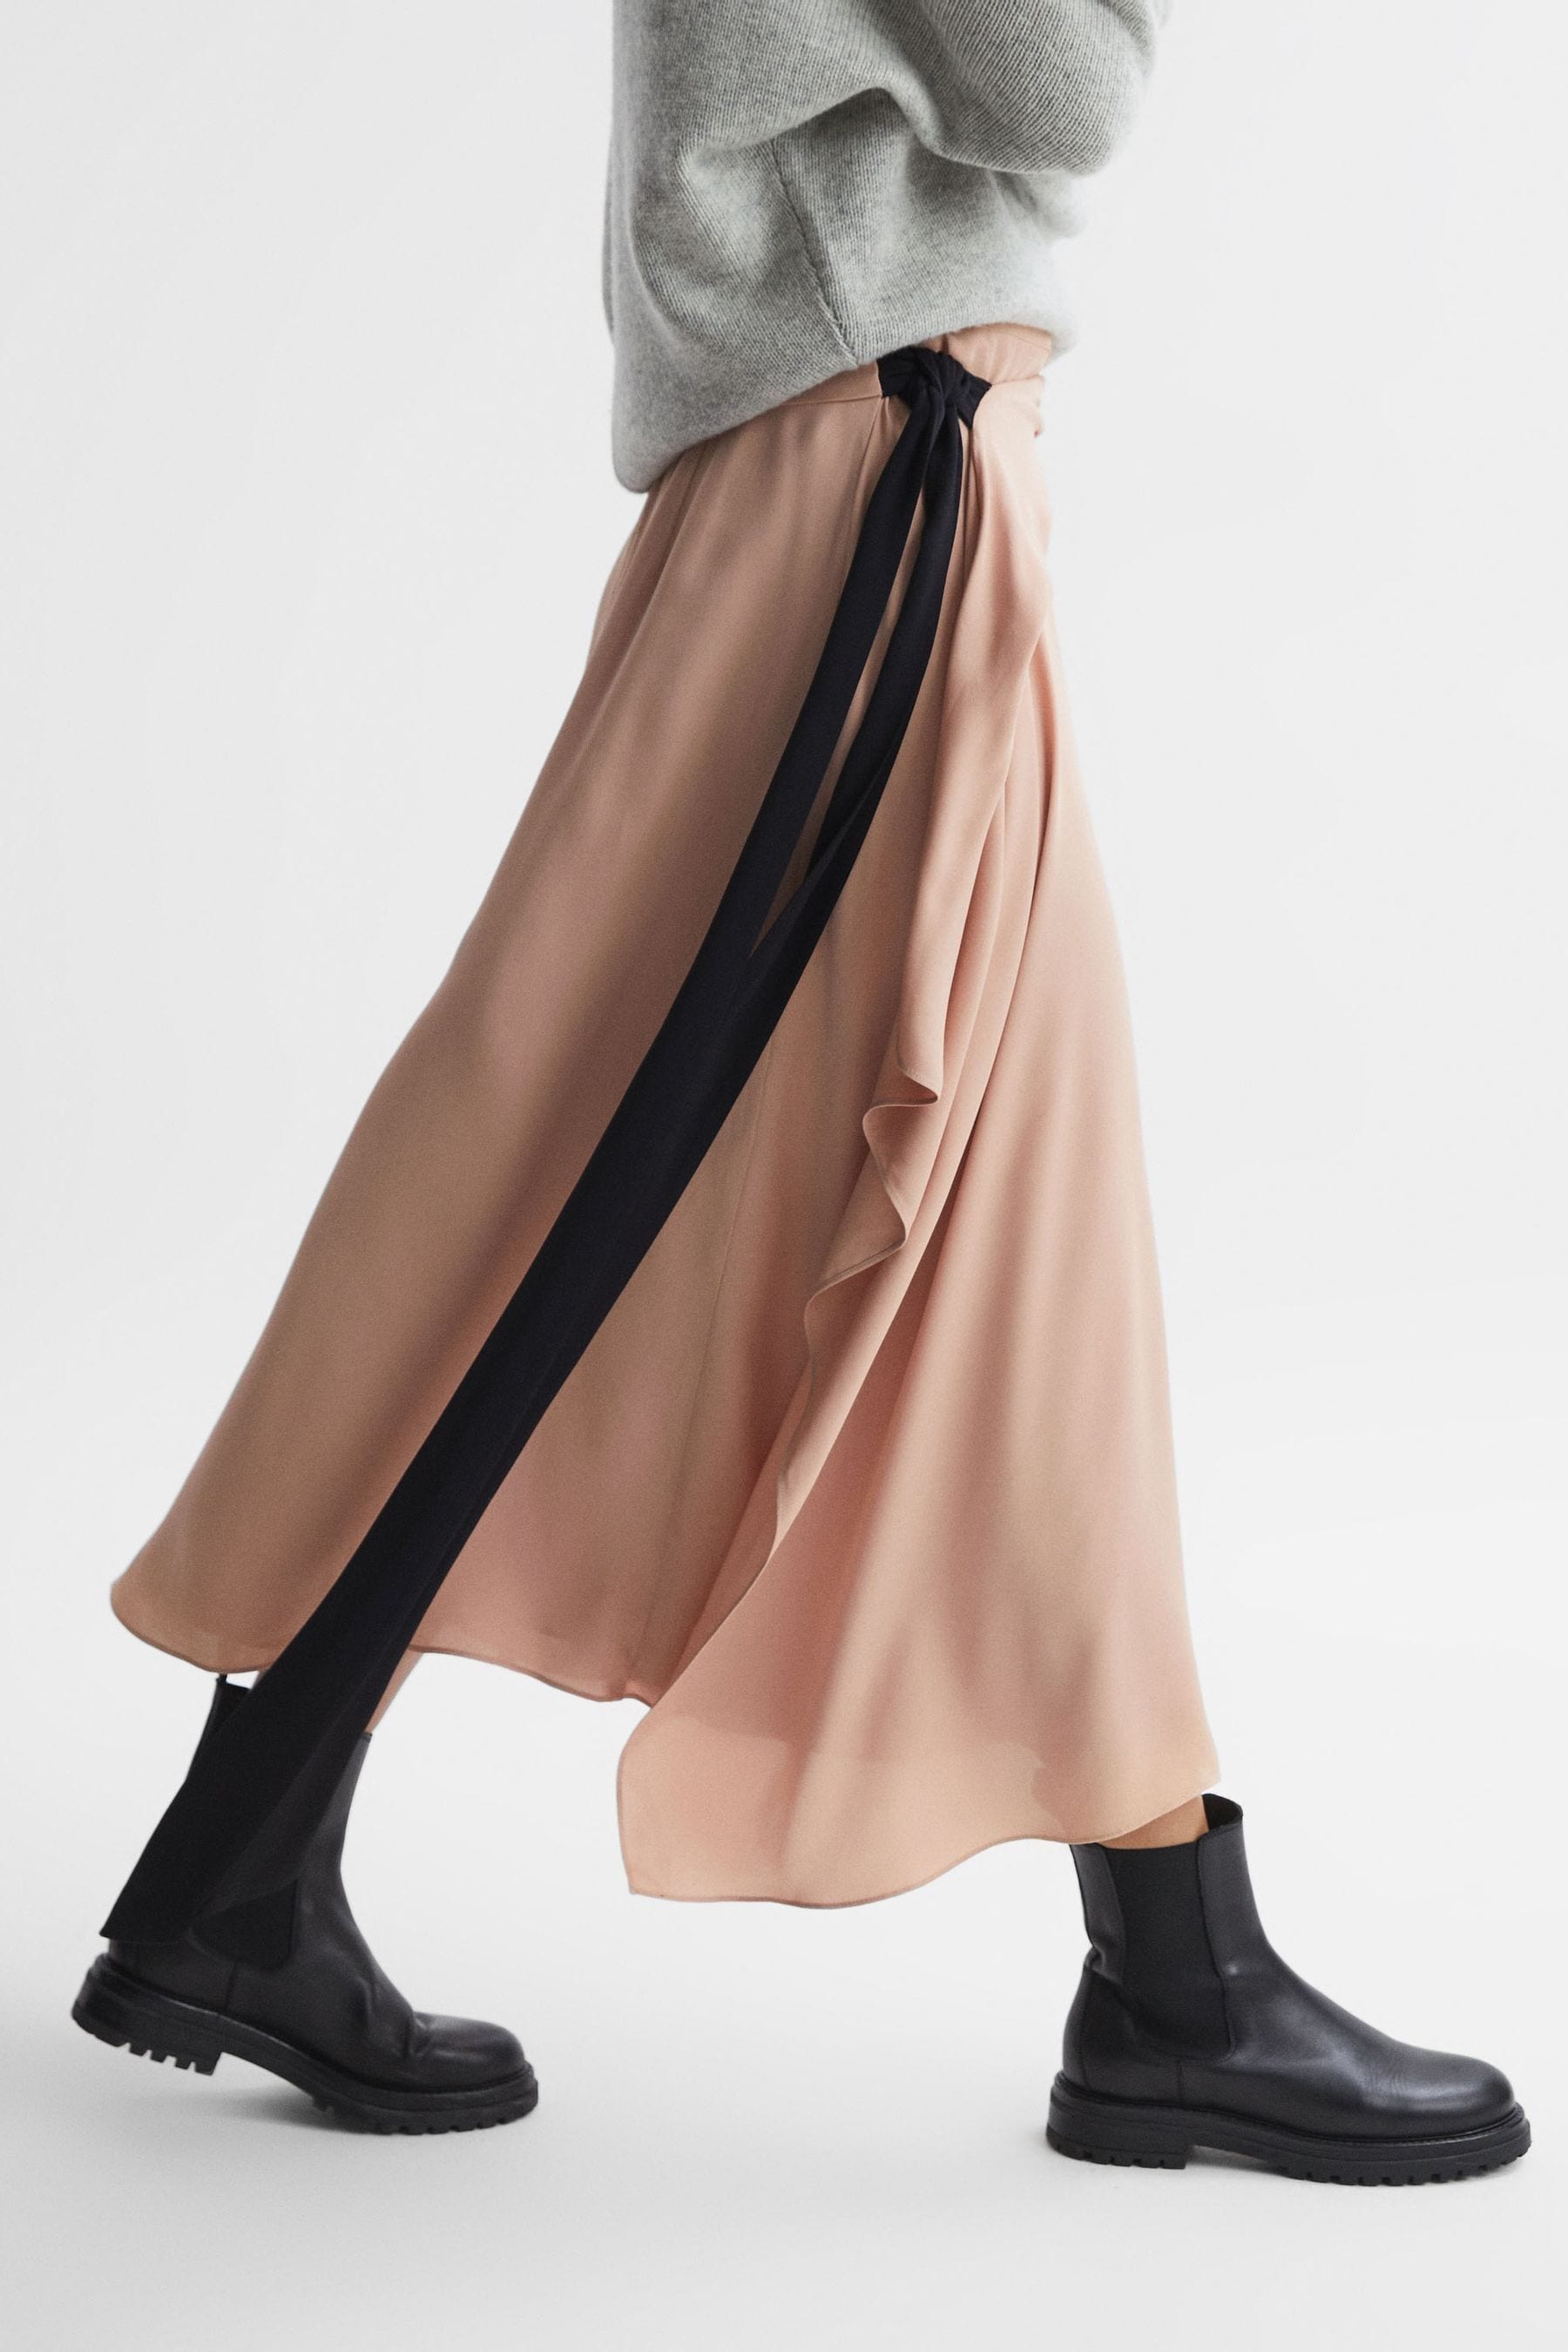 Reiss Ria - Nude Contrast Bow Midi Skirt, Us 12